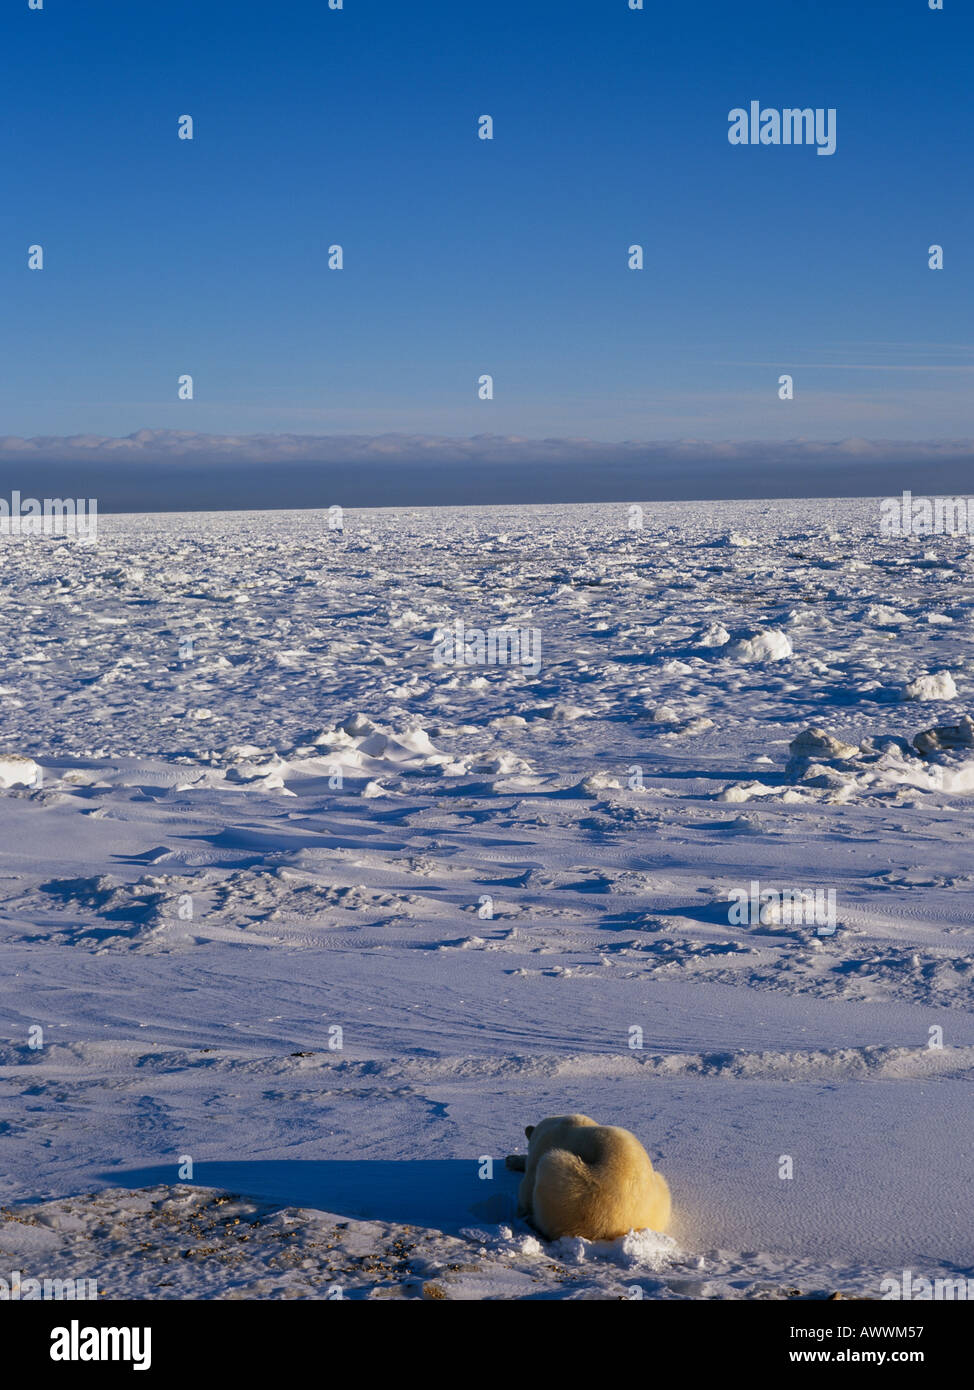 Eisbär (Ursus Maritimus) am Rand des Meeres Eis, Wapusk National Park, Hudson Bay, Manitoba, Kanada. Stockfoto